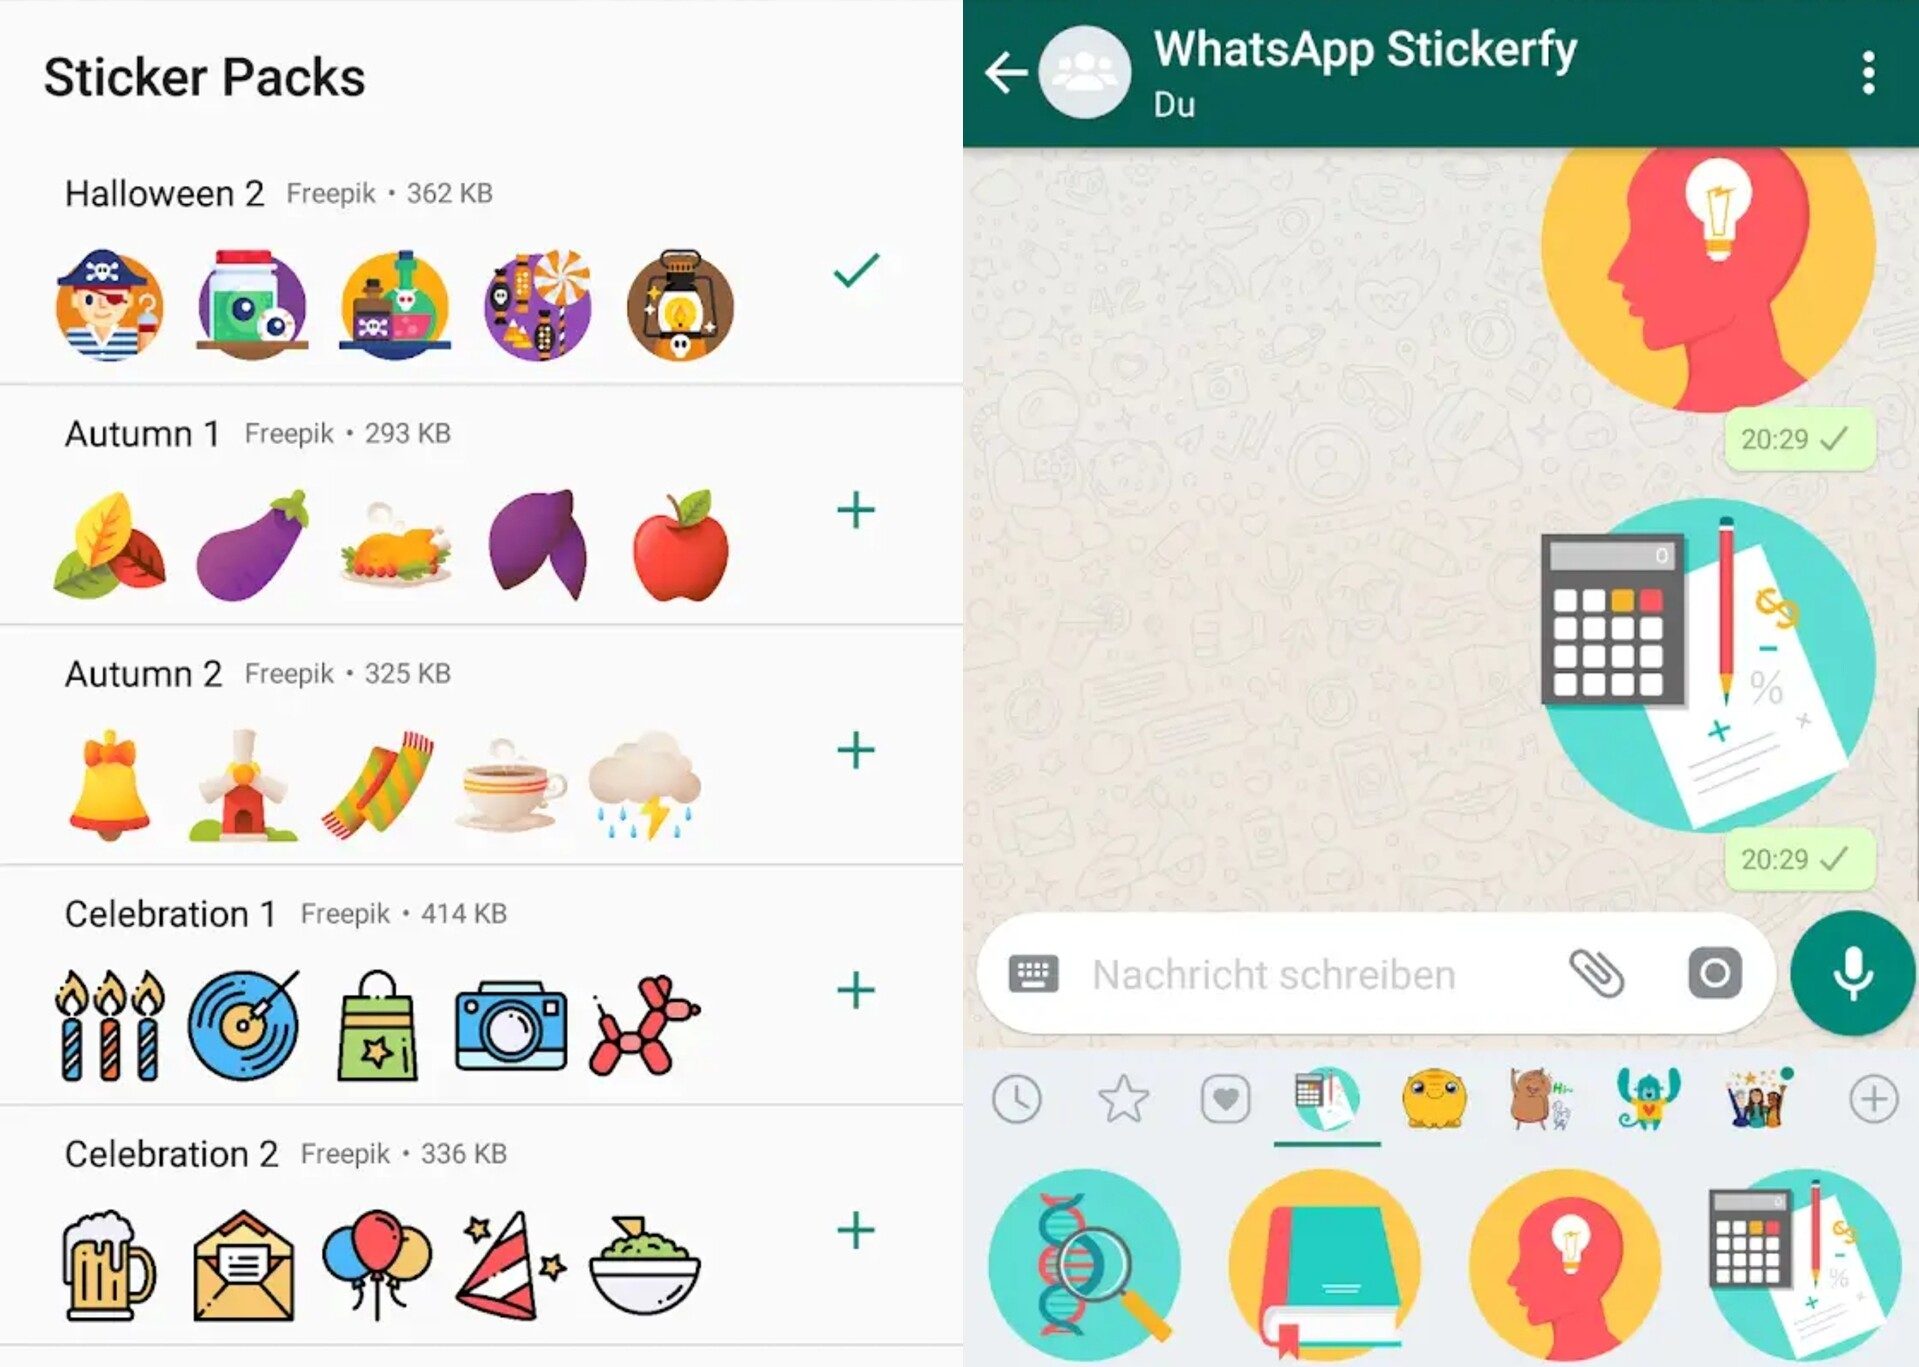 Best WhatsApp Sticker Packs to add